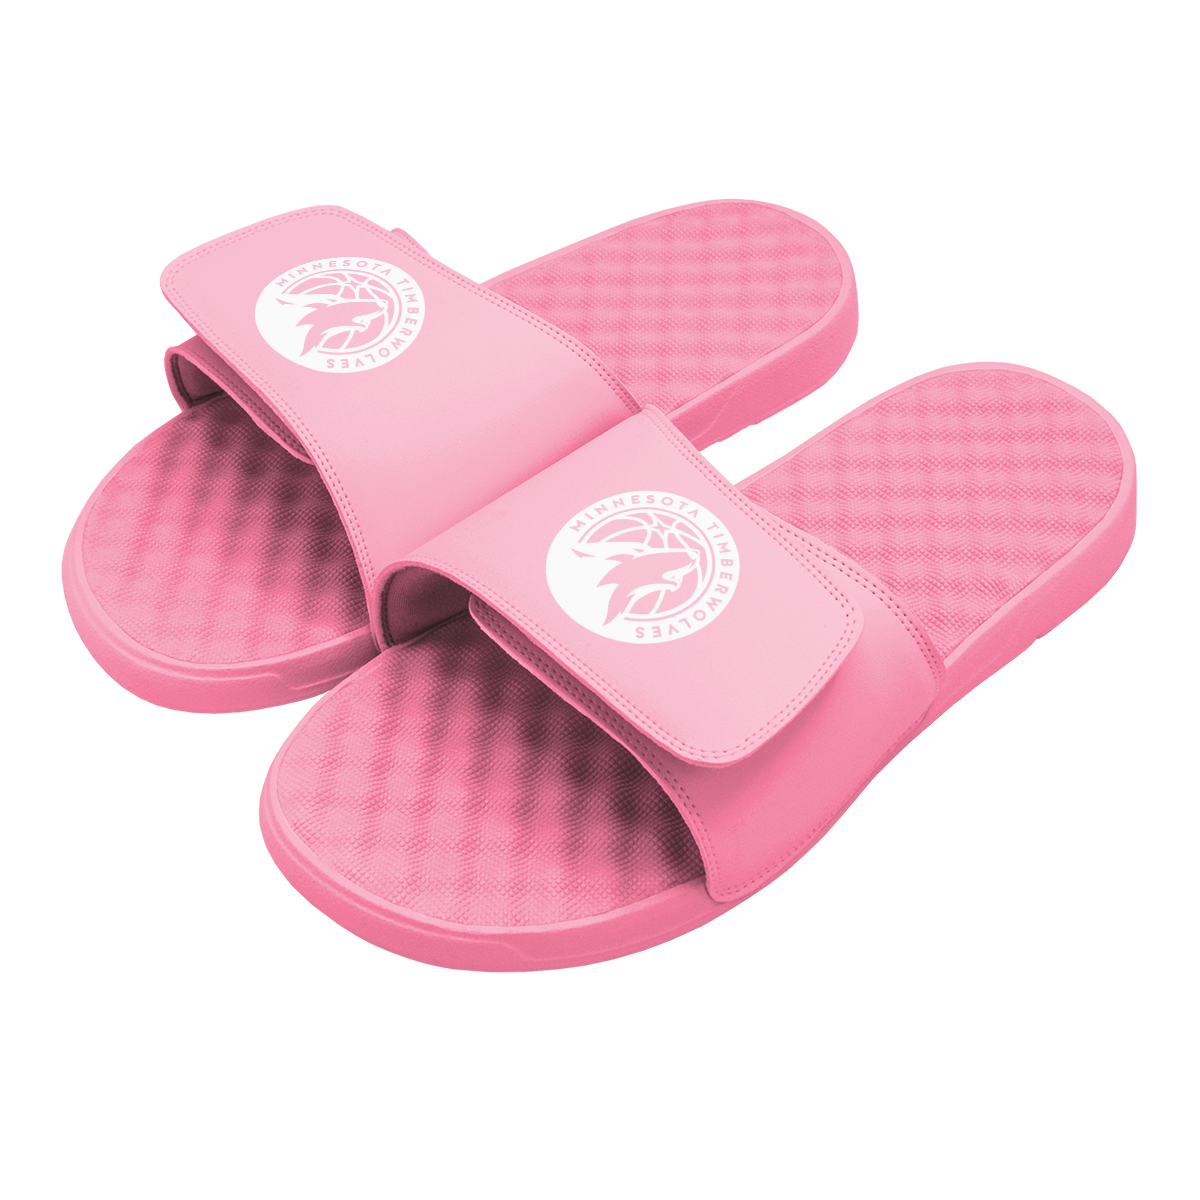 Minnesota Timberwolves Primary Pink Slides